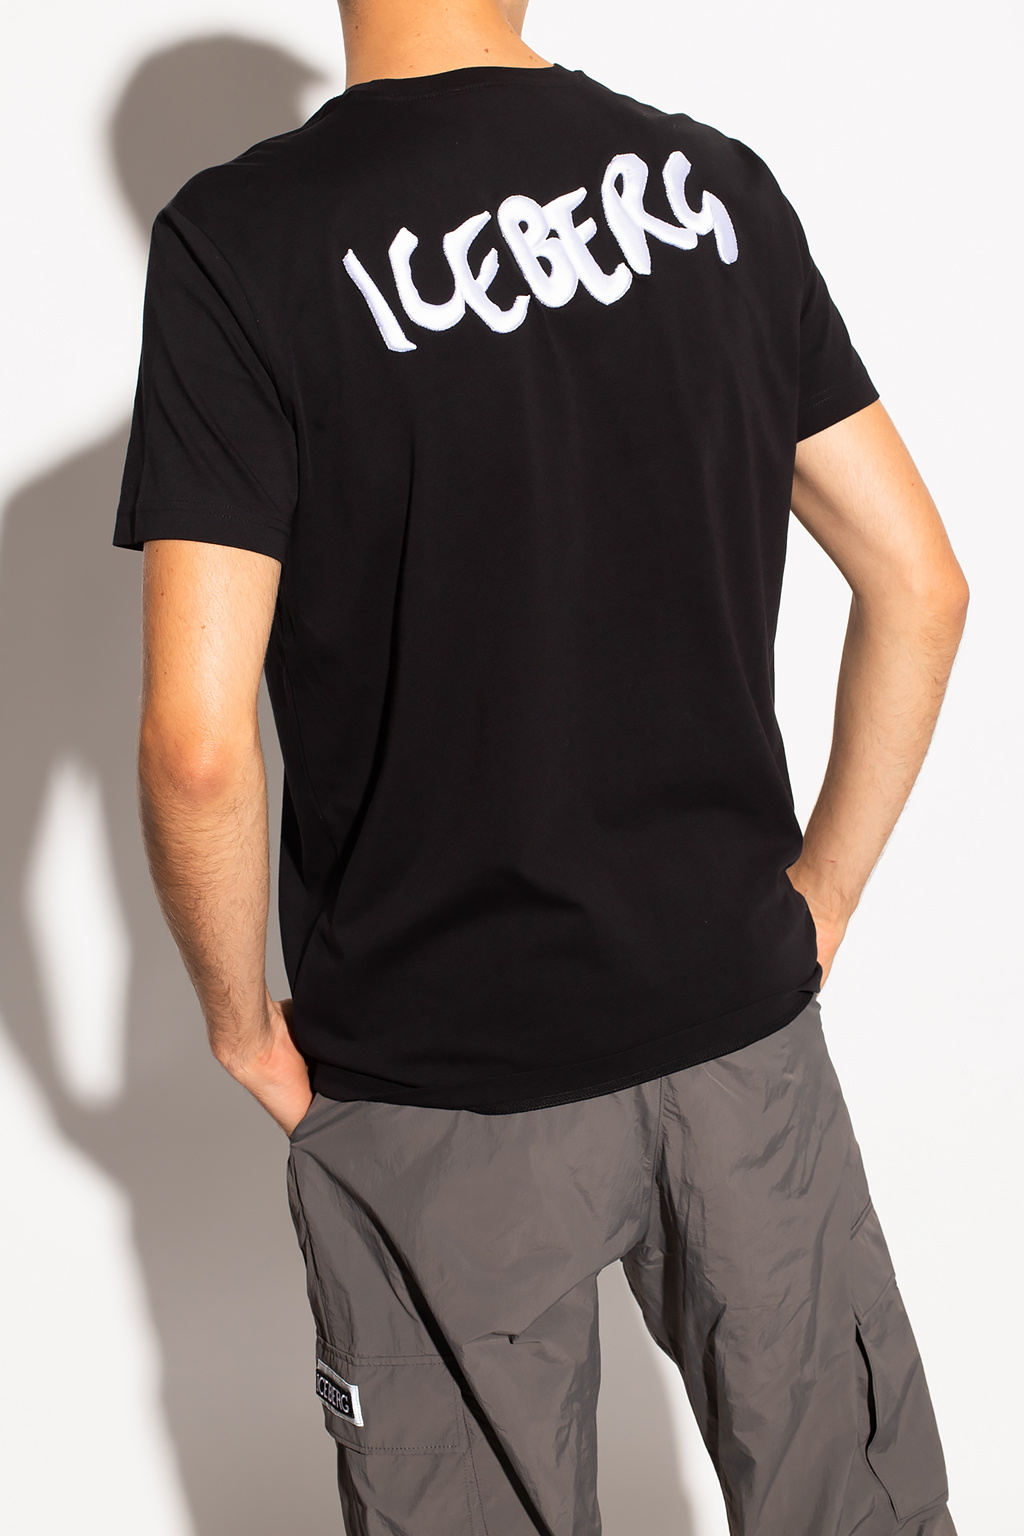 Iceberg Logo T-shirt